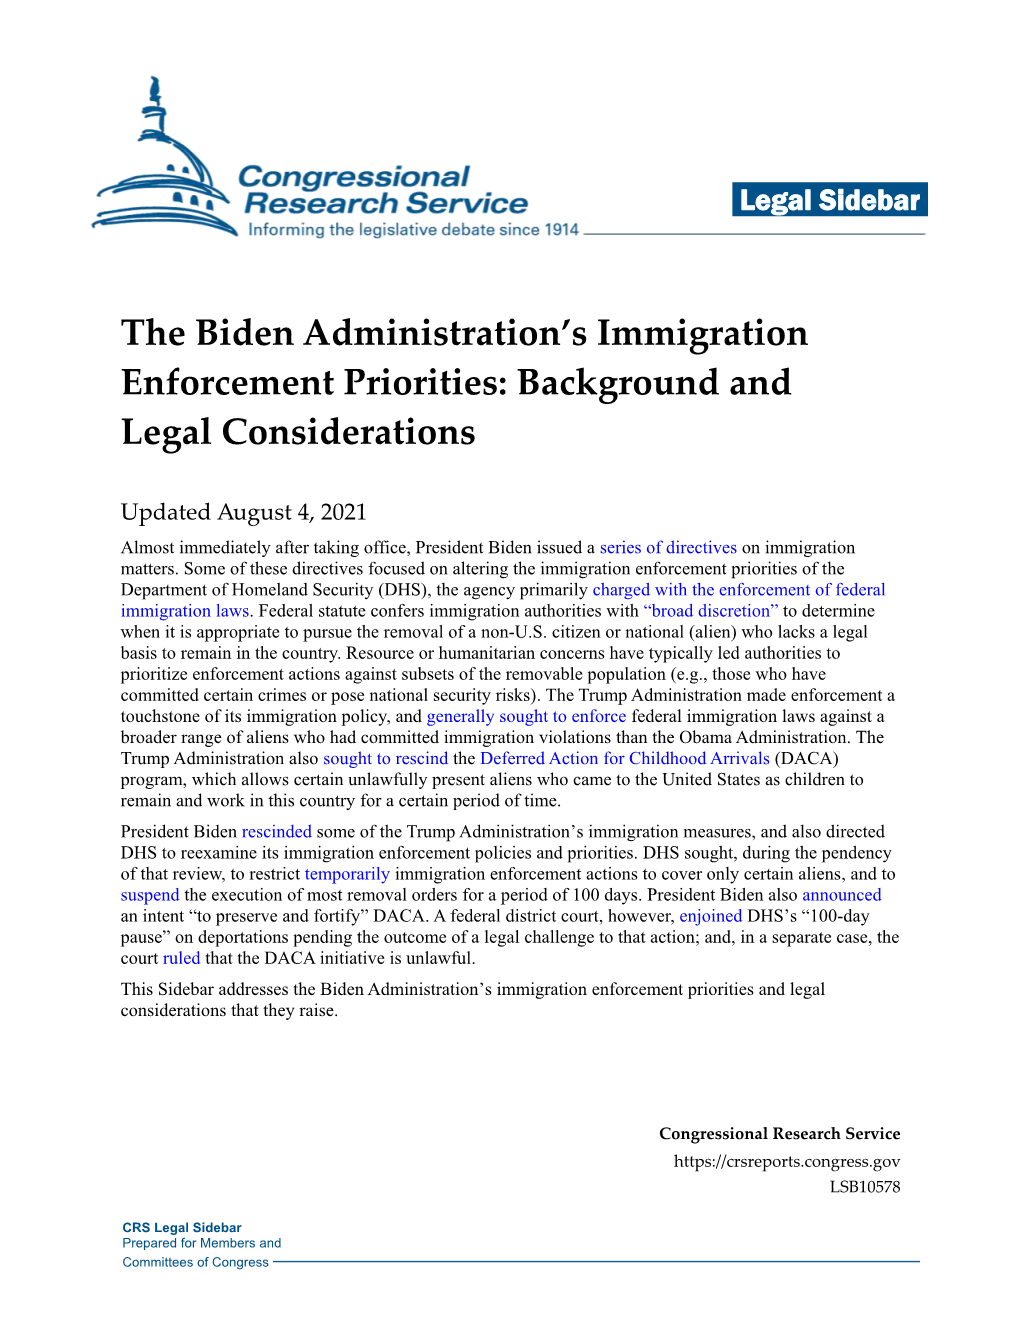 The Biden Administration's Immigration Enforcement Priorities